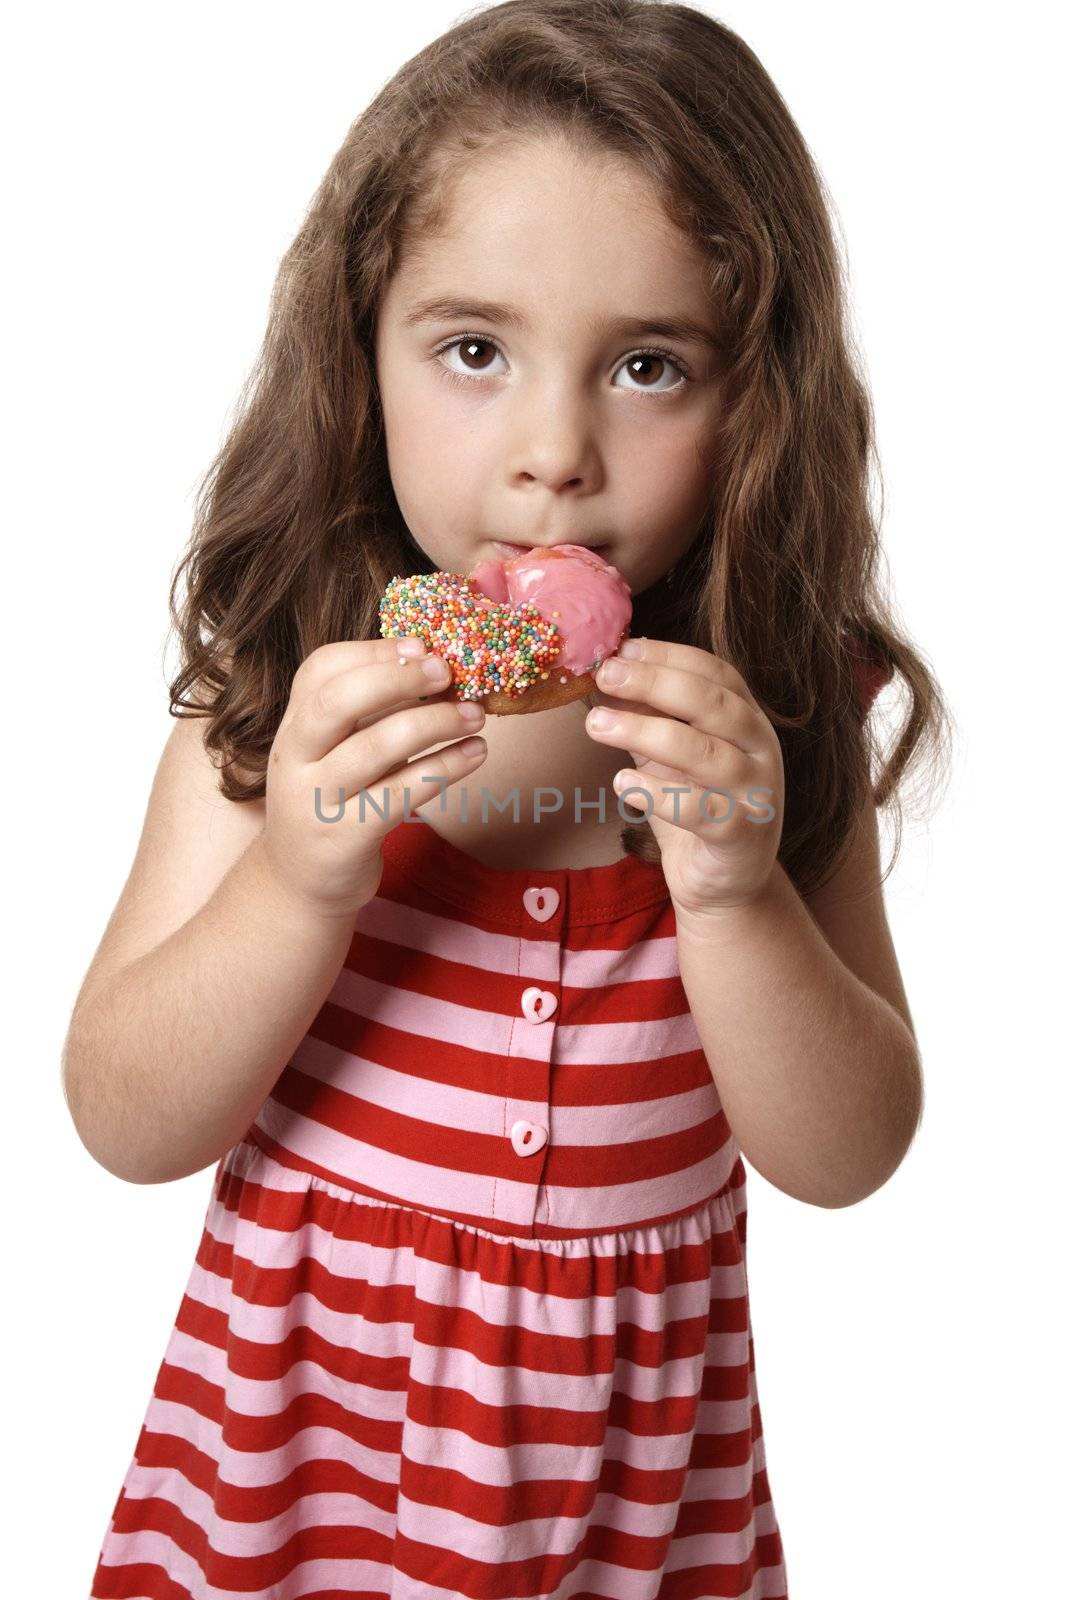 A child eating an unhealthy doughnut snack.